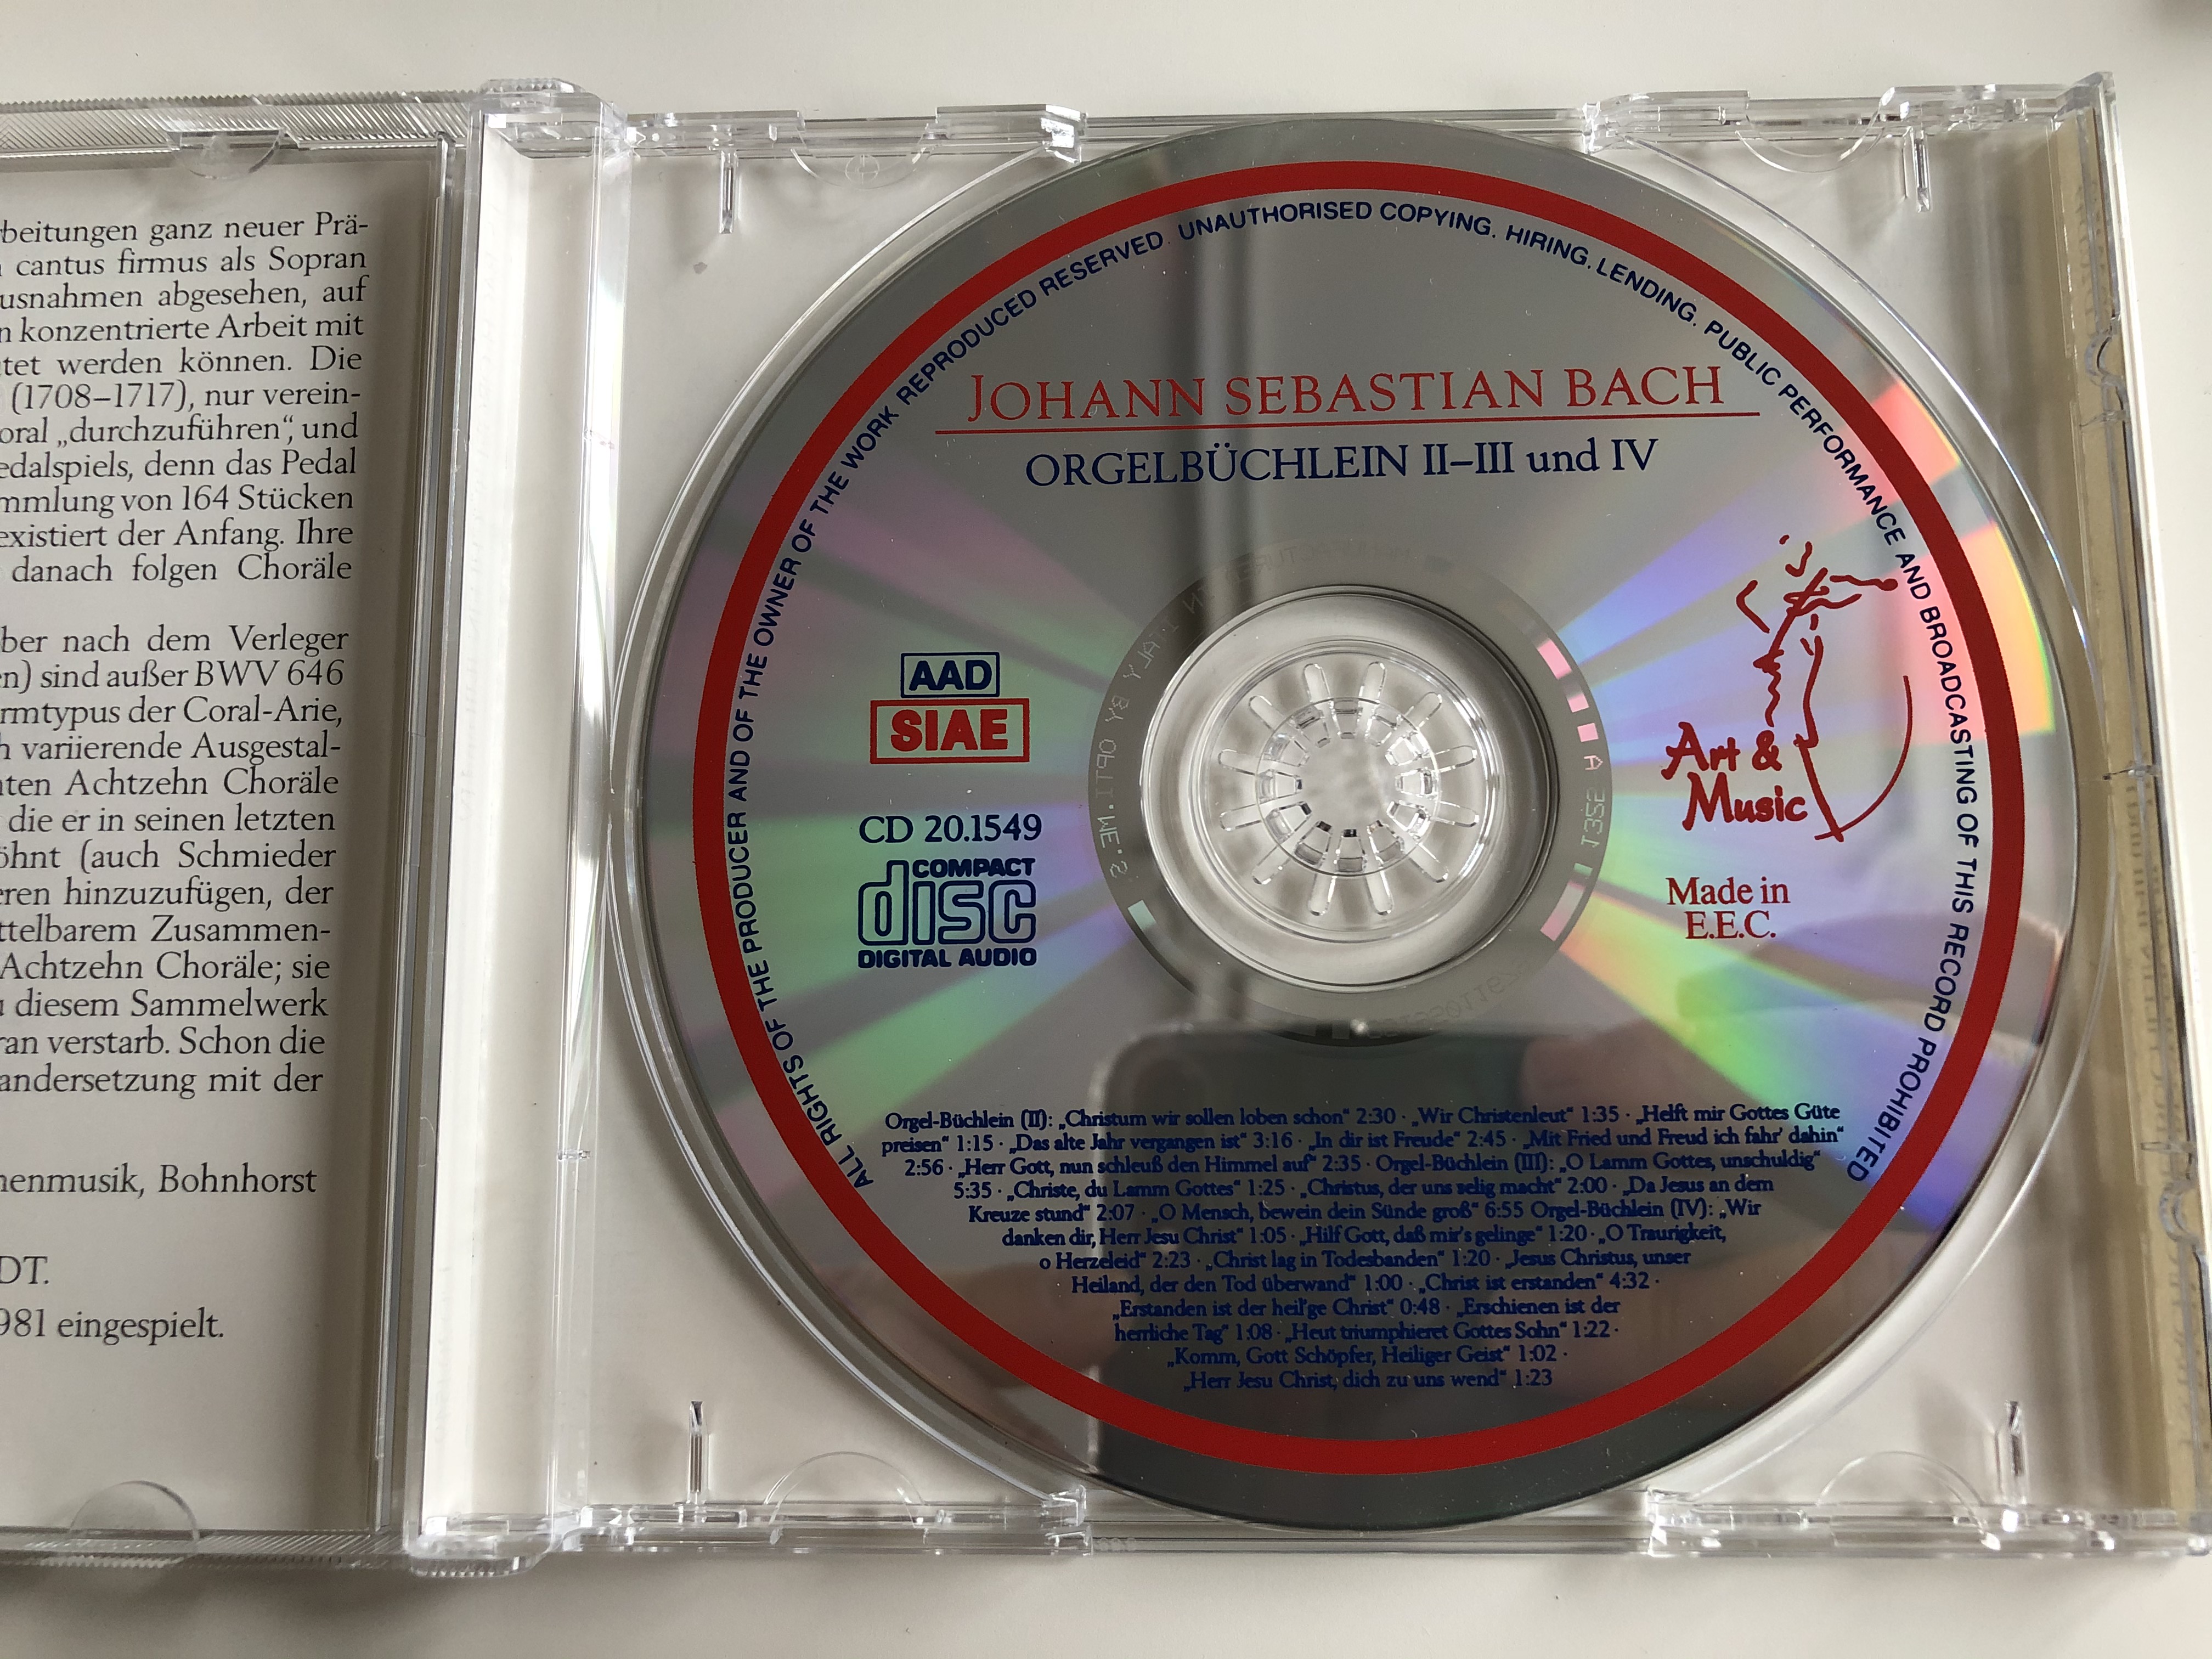 johann-sebastian-bach-orgelbuchlein-ii-iii-und-iv-wolfgang-stockmeier-orgel-wallfahrtskirche-rulle-art-music-audio-cd-cd-20-3-.jpg